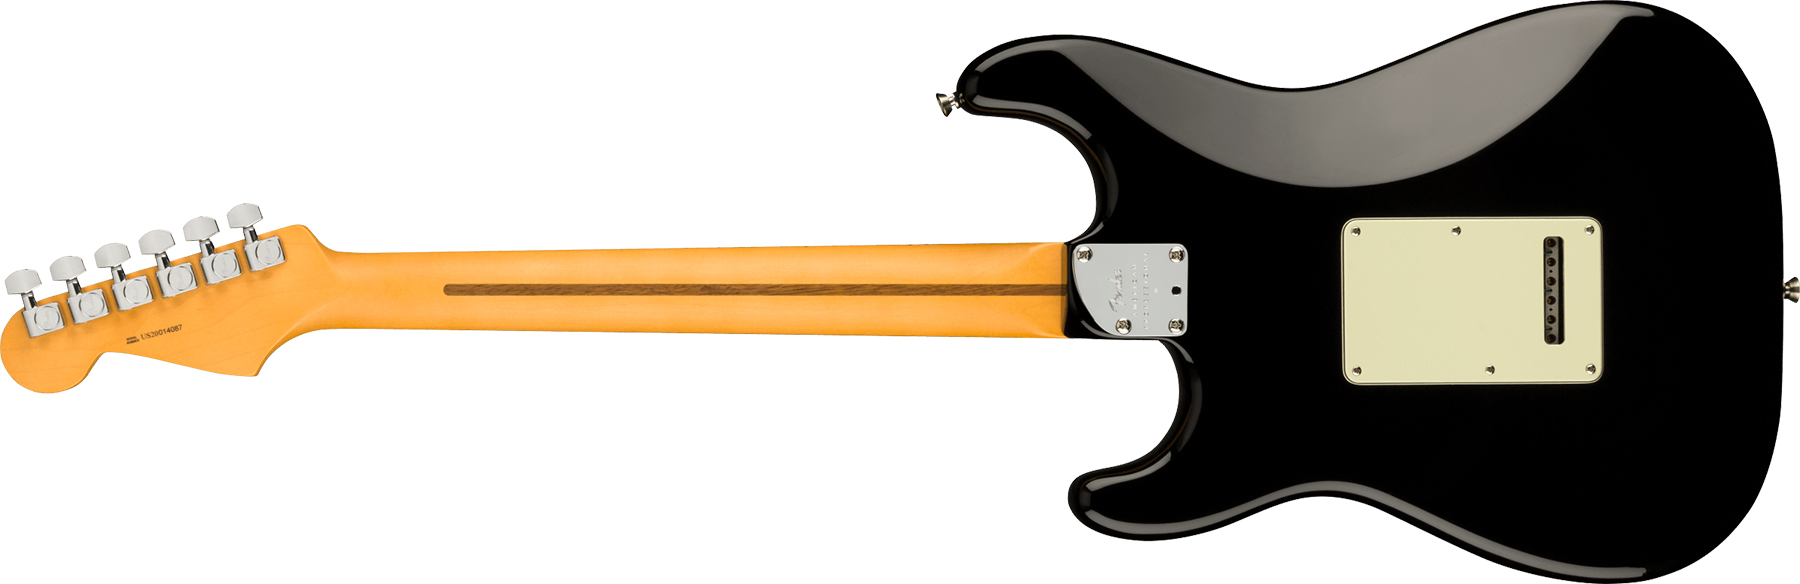 Fender Strat American Professional Ii Usa Mn - Black - E-Gitarre in Str-Form - Variation 1